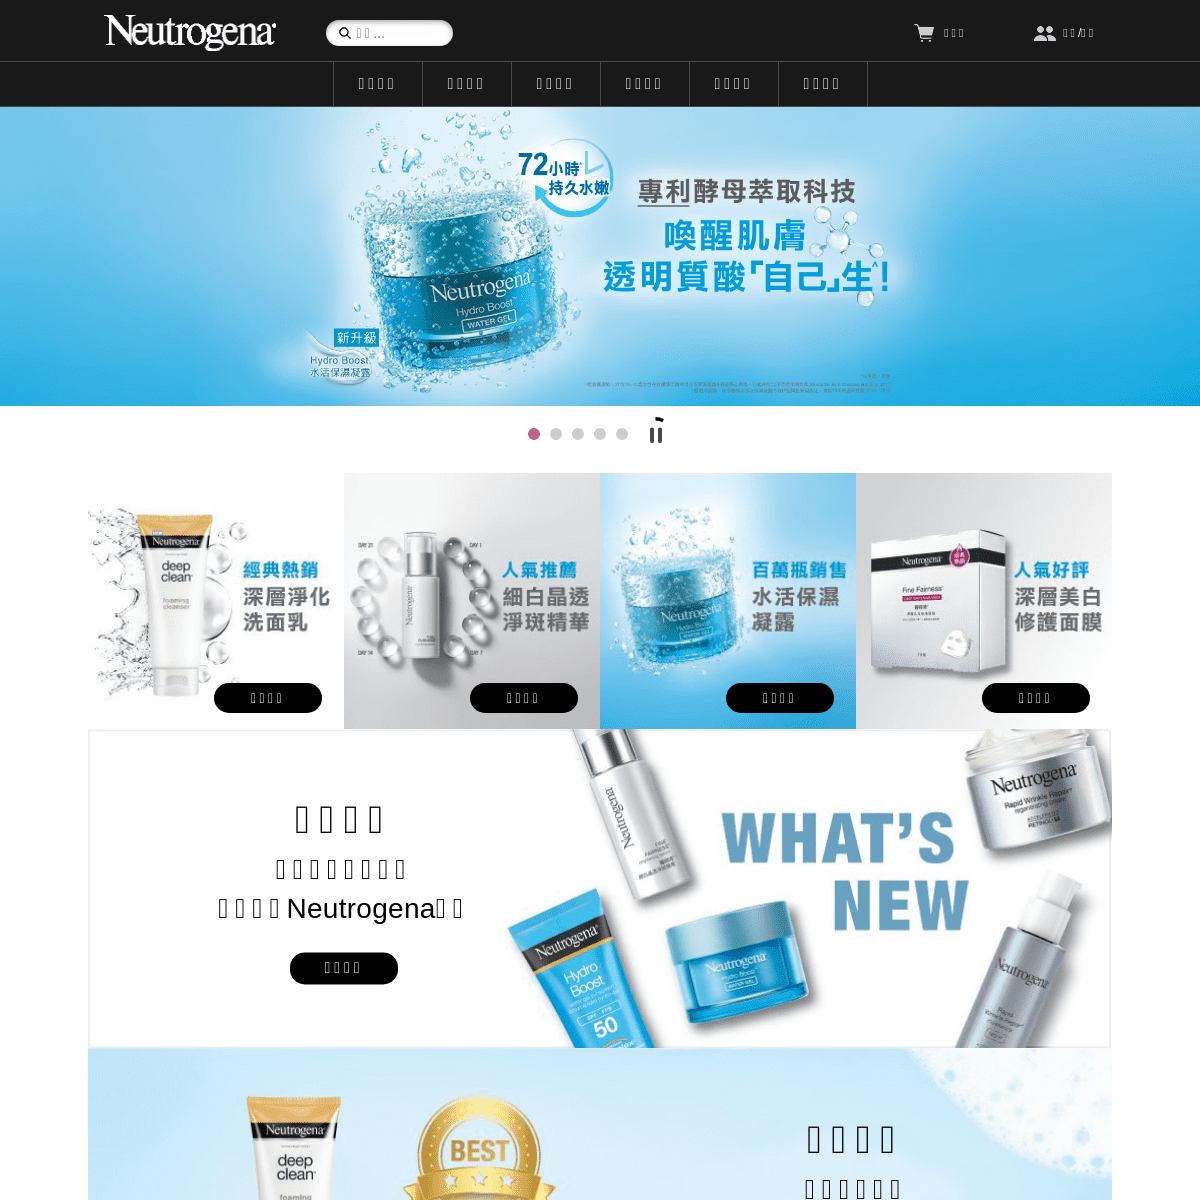 A complete backup of neutrogena.com.hk